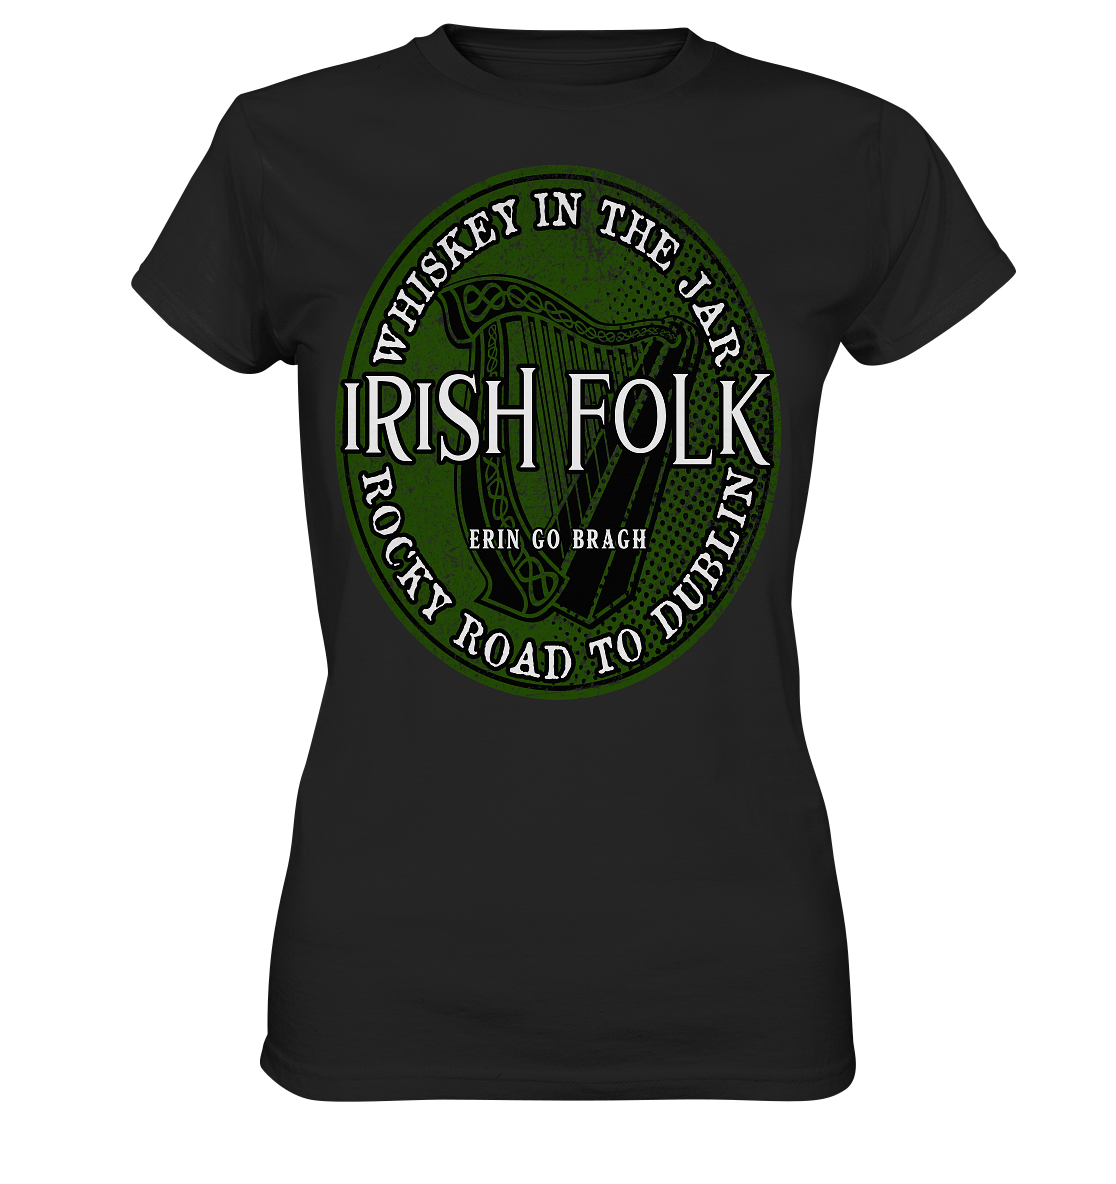 Irish Folk "Erin Go Bragh" - Ladies Premium Shirt